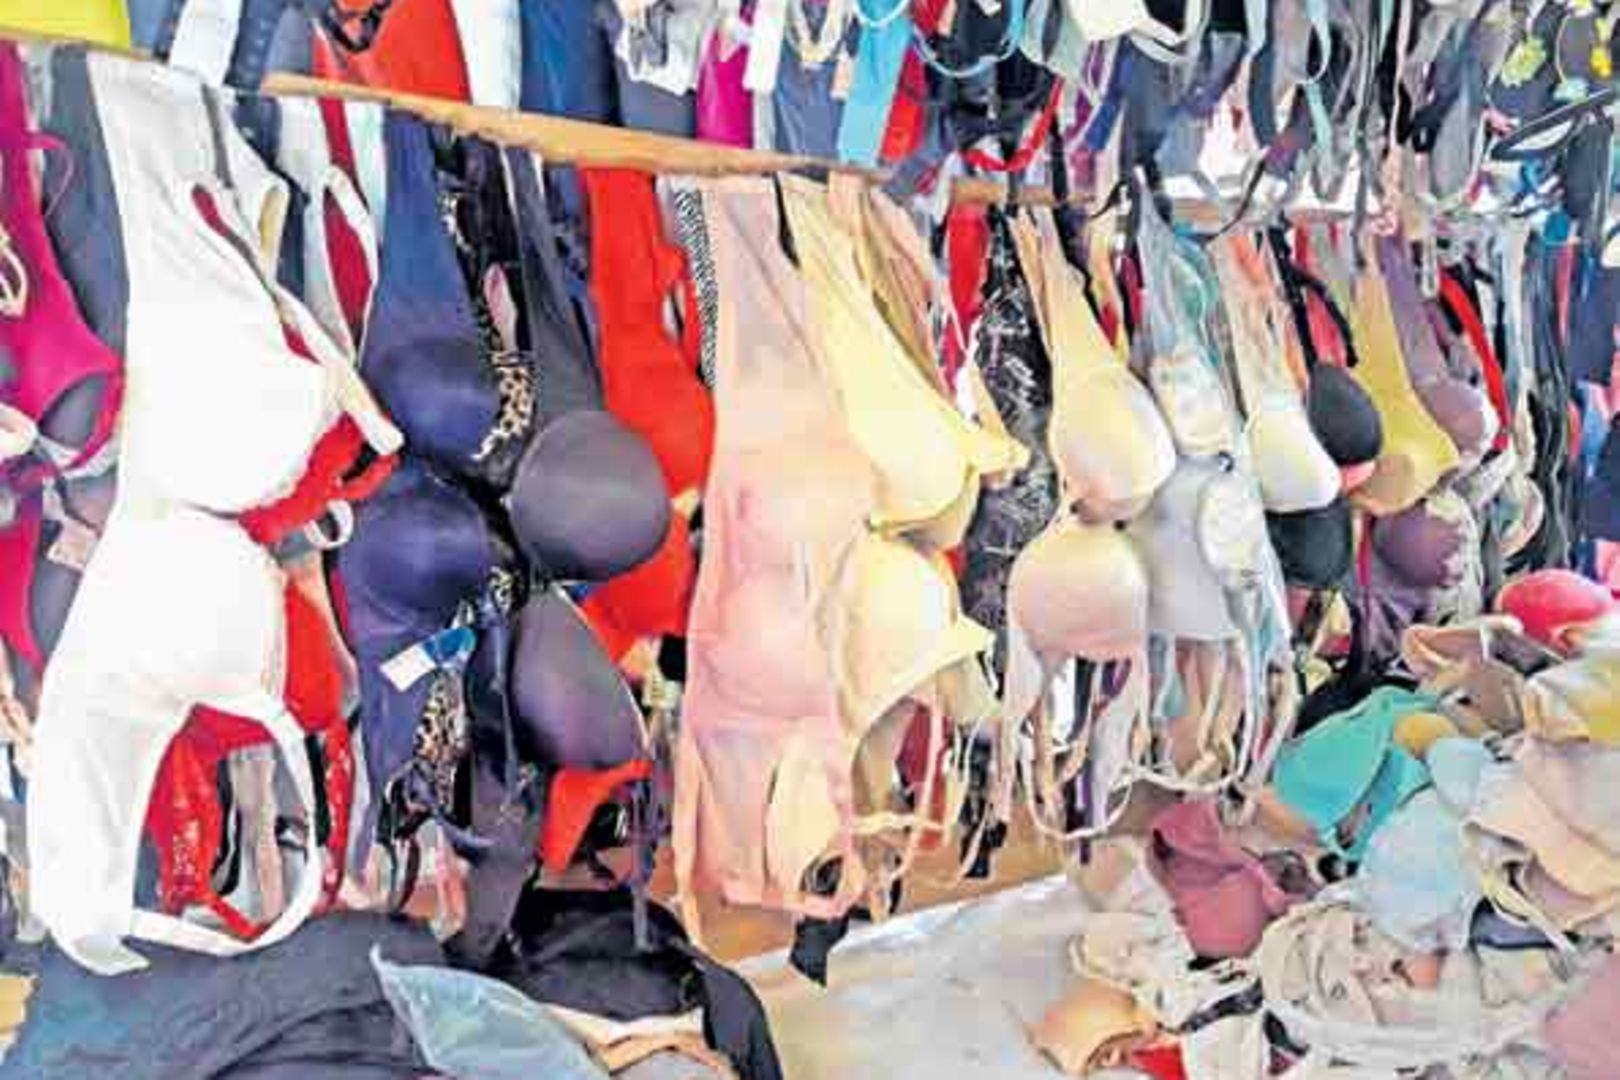 On women buying used underwear